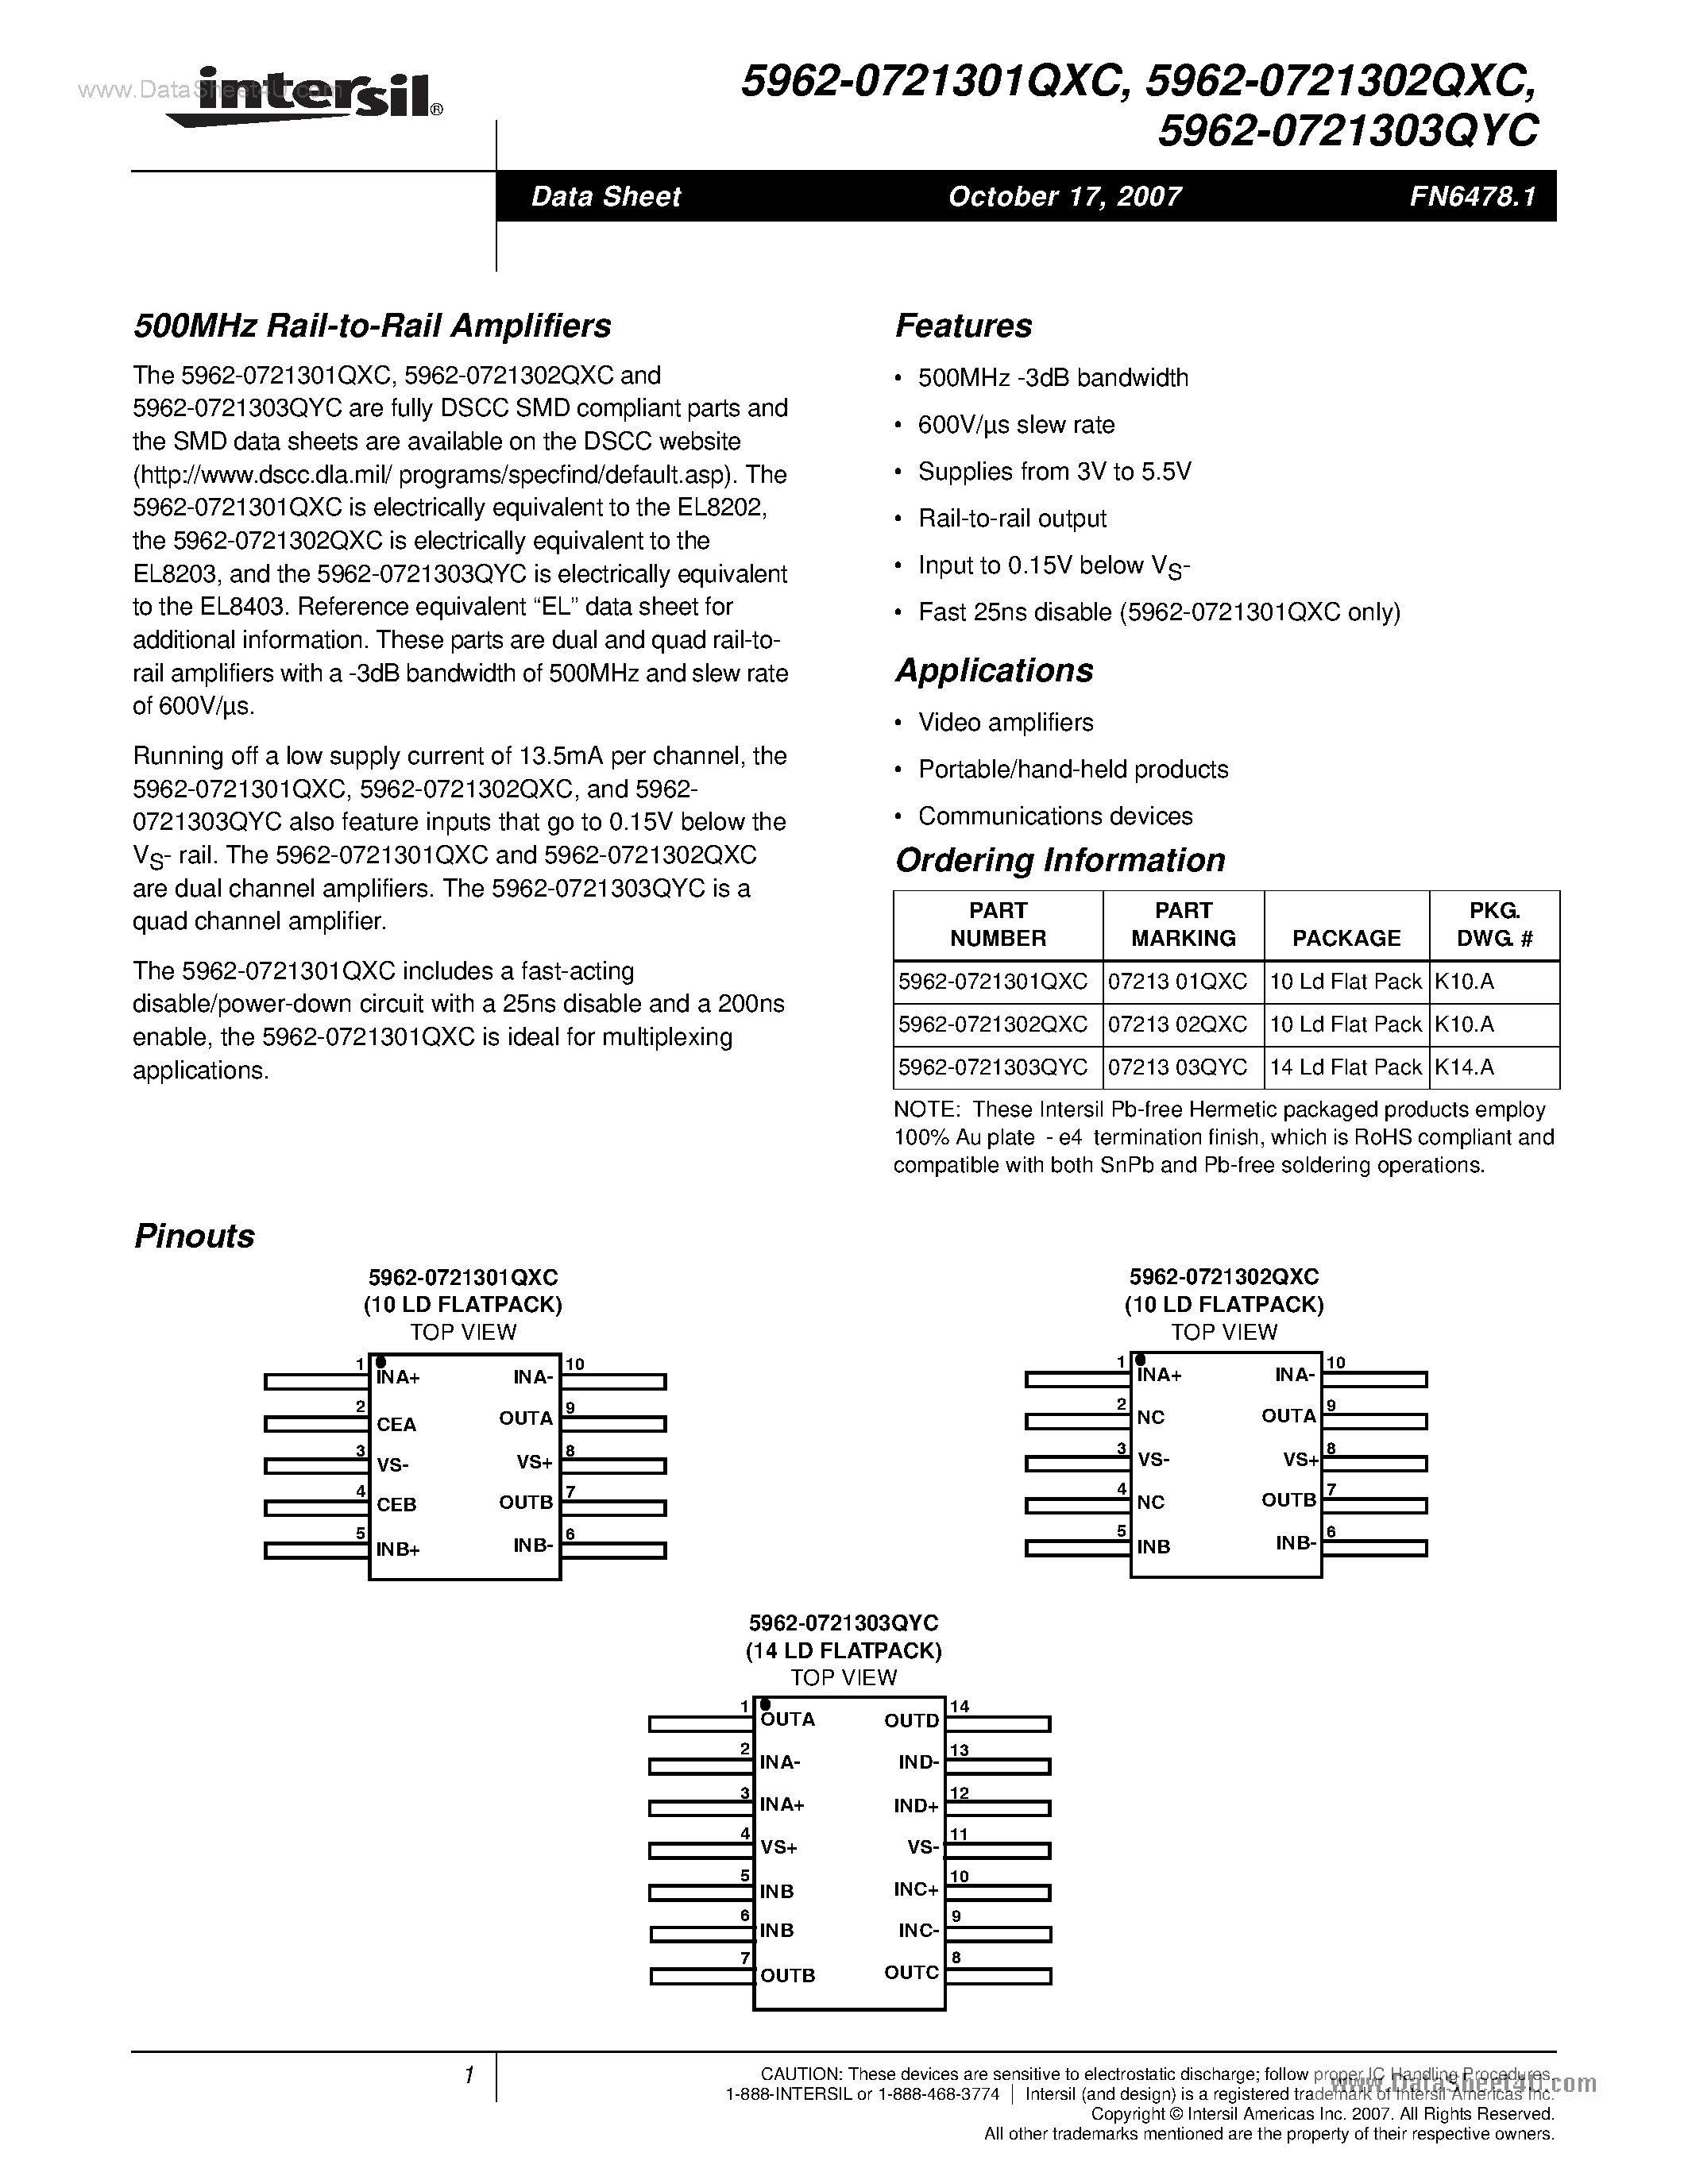 Datasheet 5962-0721301QXC - 500MHz Rail-to-Rail Amplifiers page 1